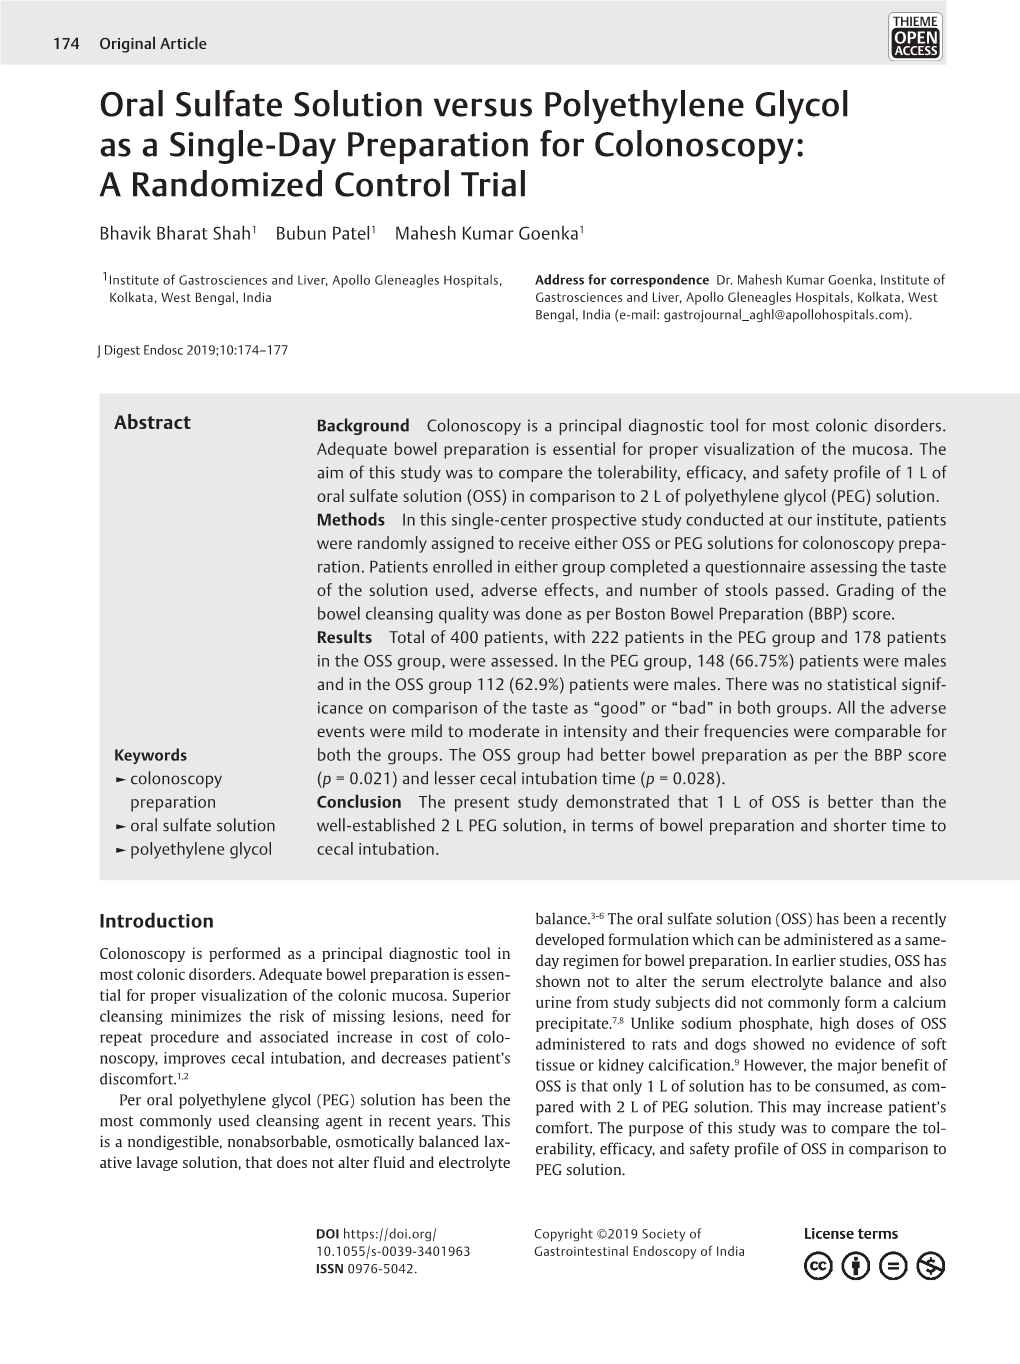 Oral Sulfate Solution Versus Polyethylene Glycol As a Single-Day Preparation for Colonoscopy: a Randomized Control Trial